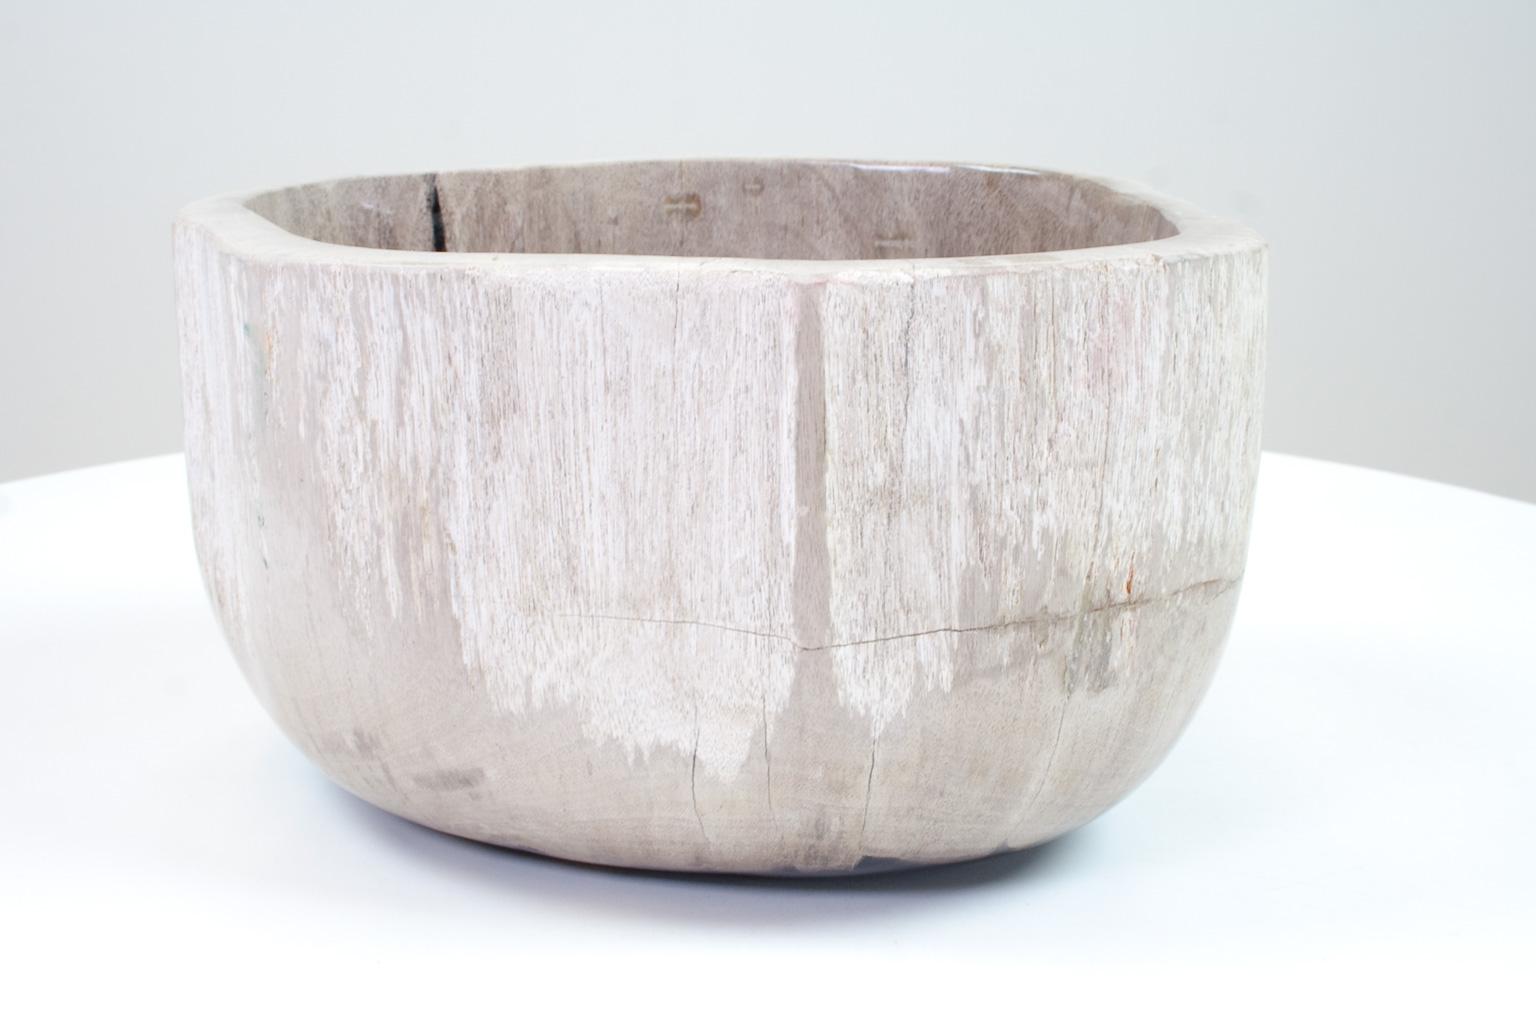 Indonesian Deep Petrified Wood Bowl in Beige and Hard Coal, Home Accessory Organic Original